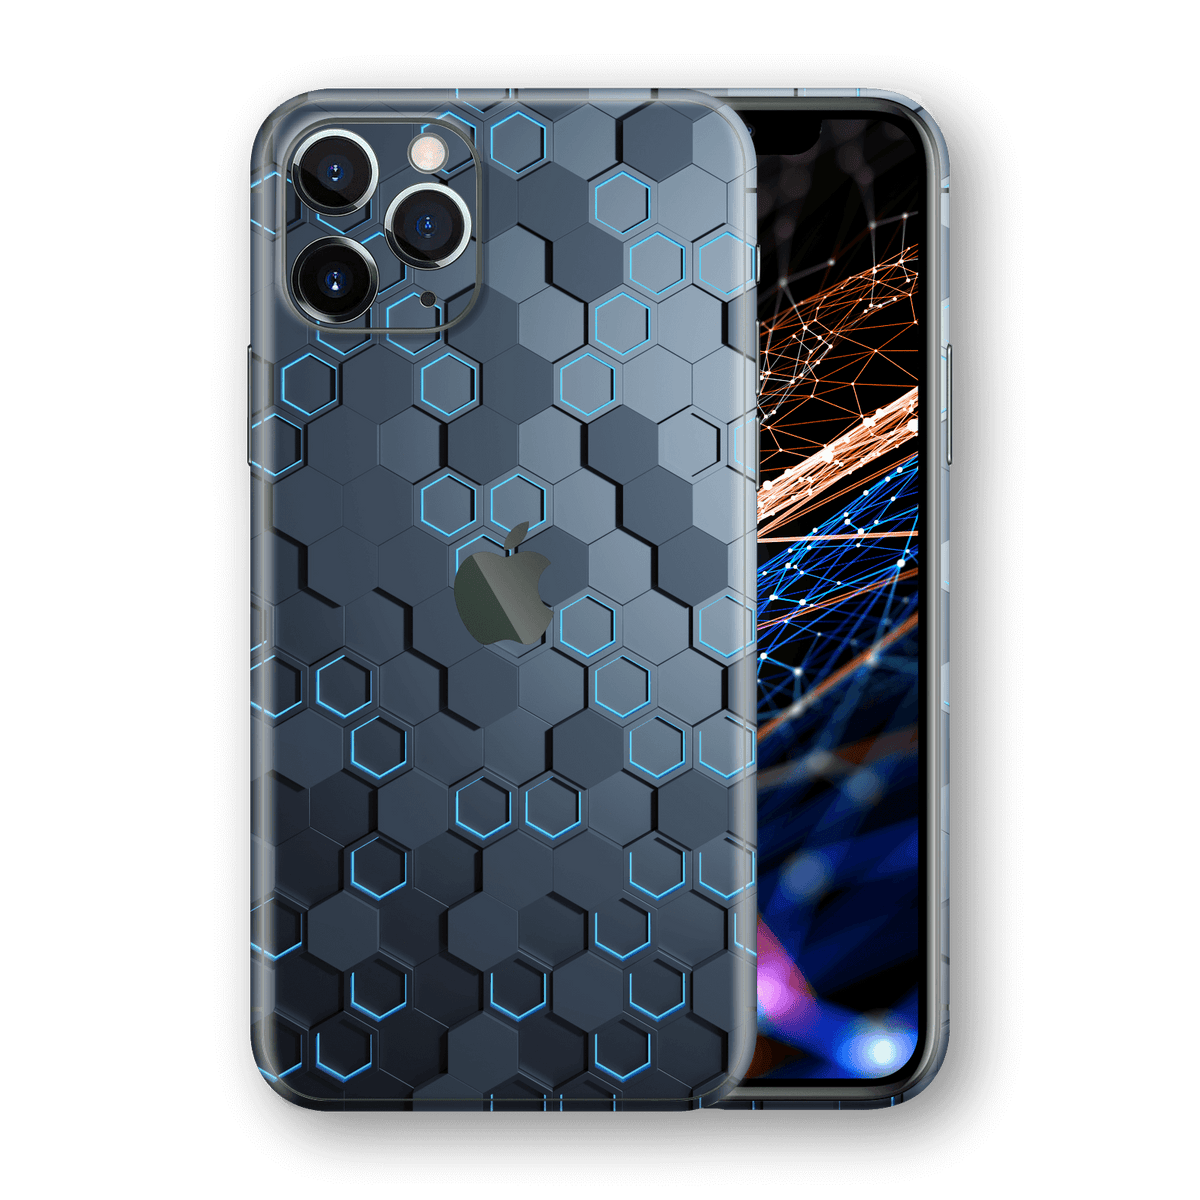 Iphone 11 Pro Blue Hexagon Skin Wrap Decal Easyskinz